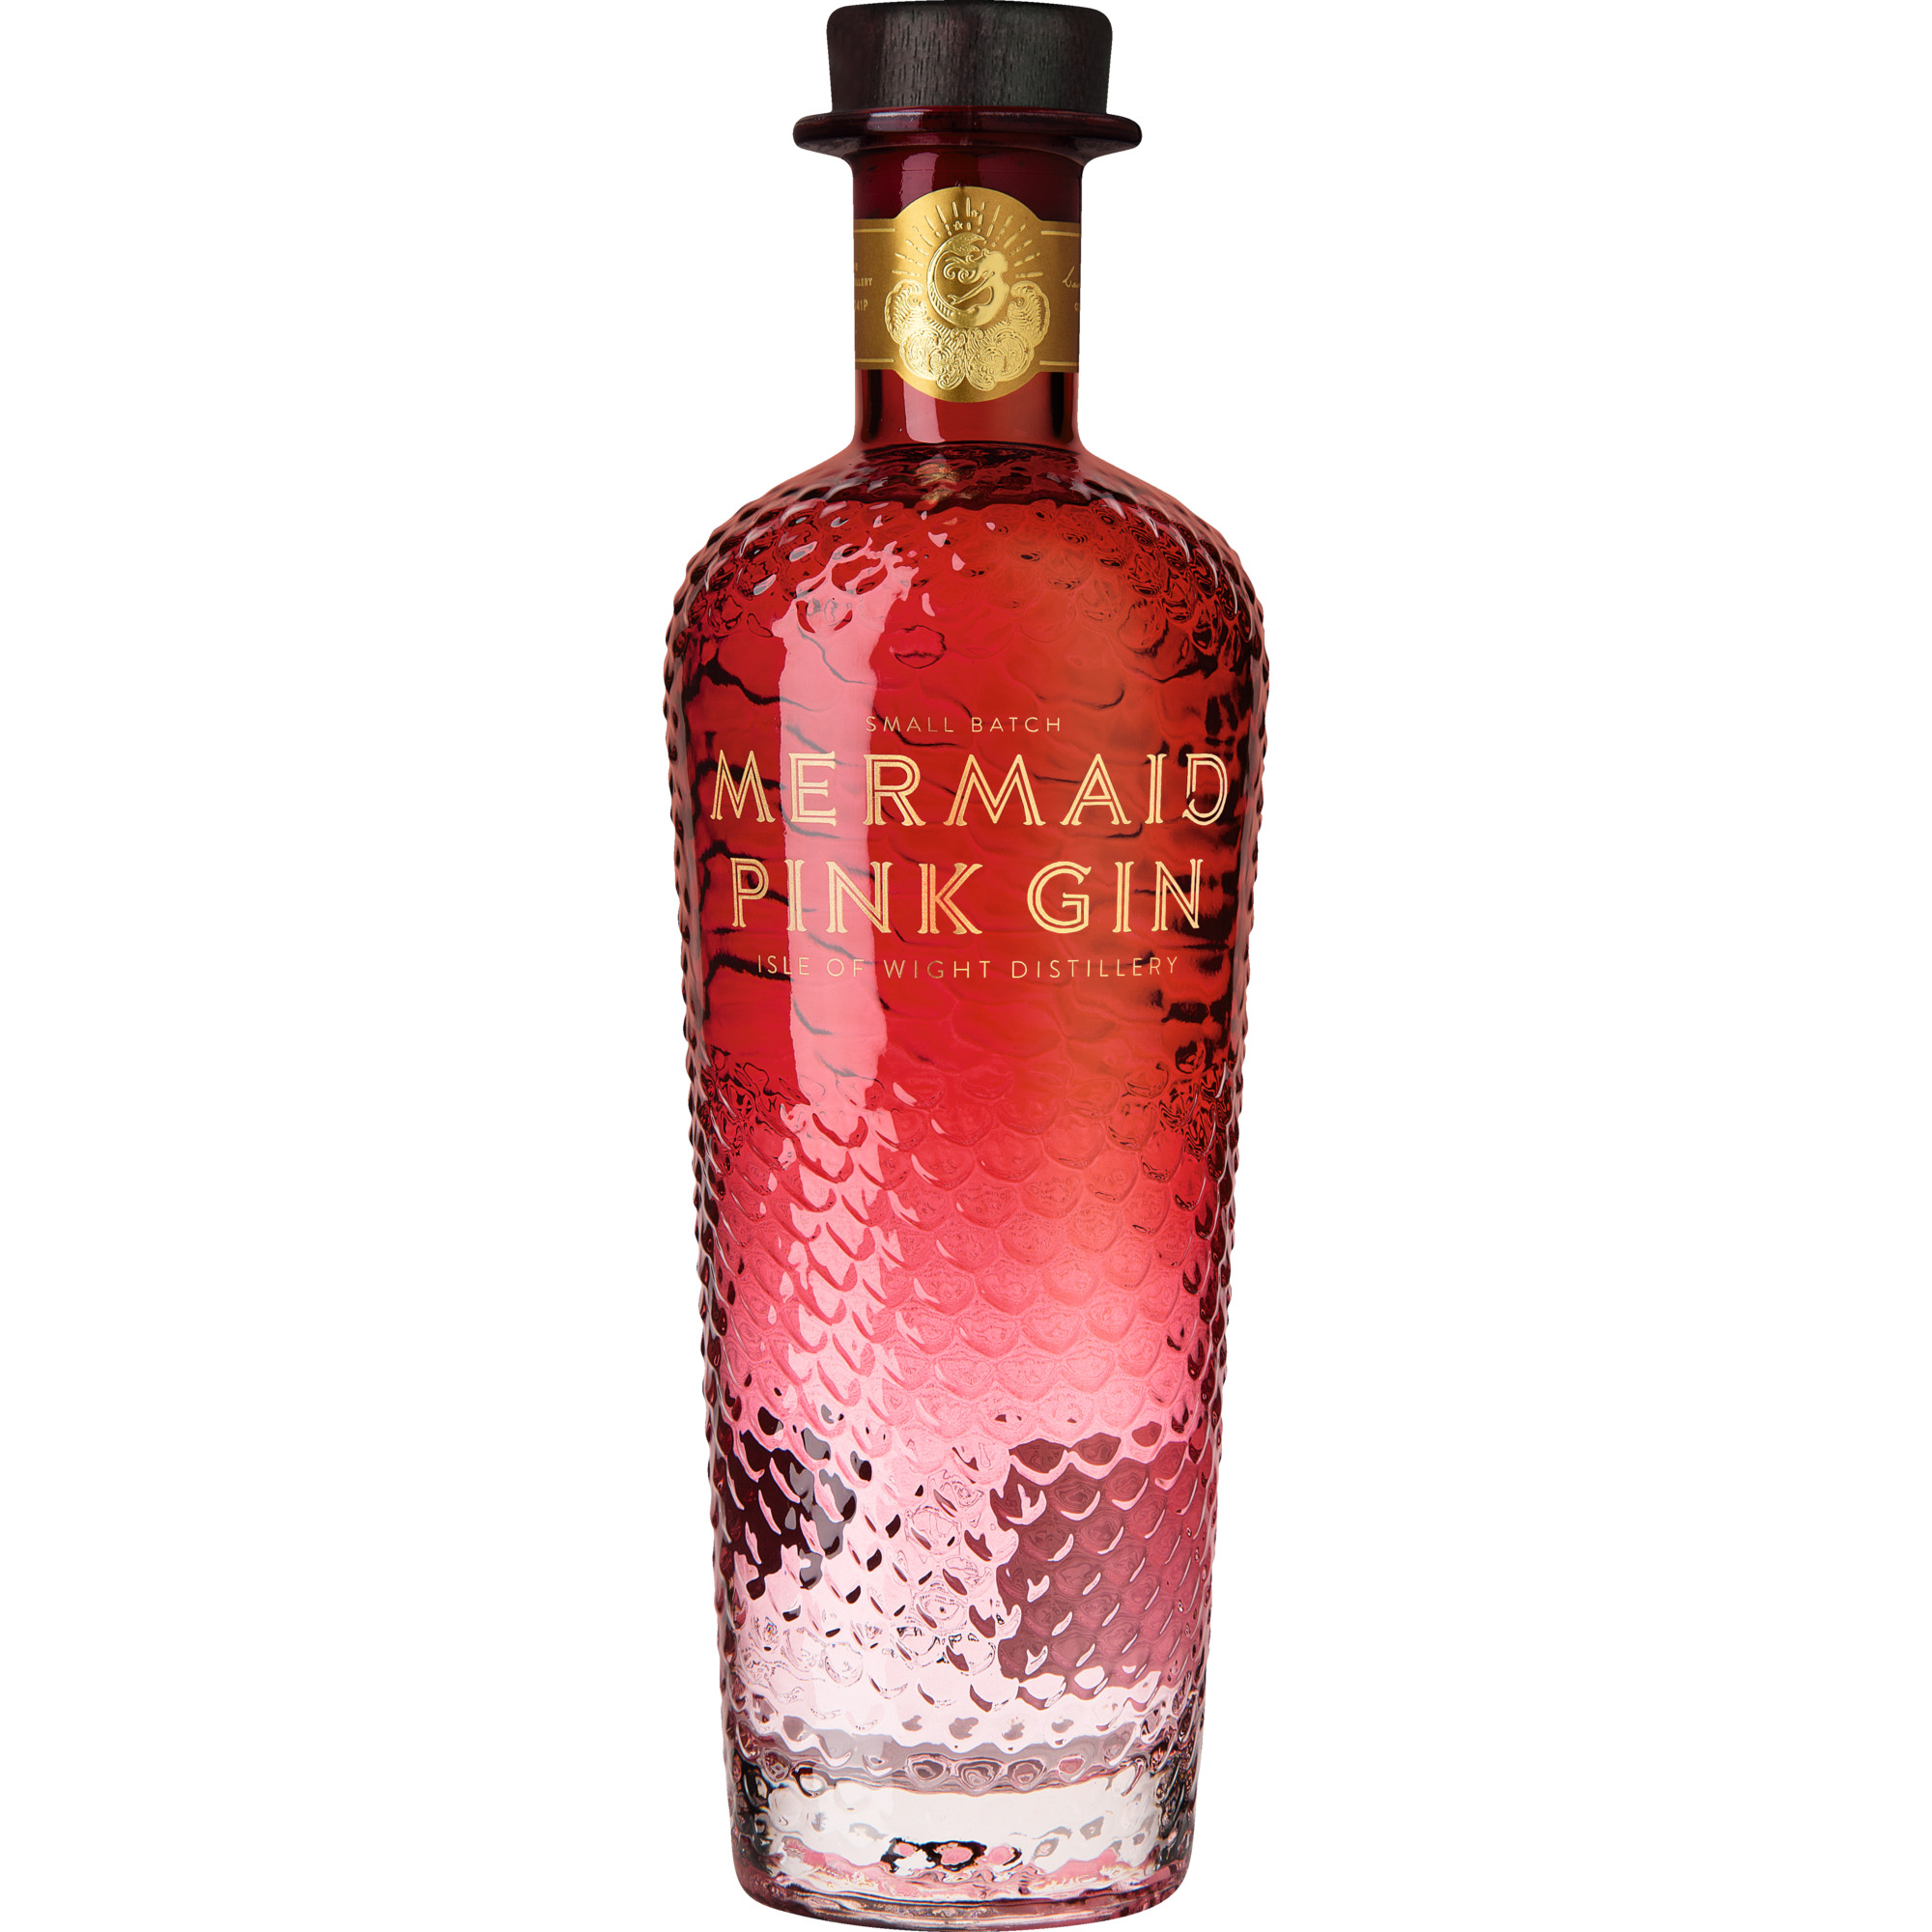 Mermaid Pink Gin, Isle of Wight, 0,7 L, 38% Vol., England, Spirituosen  Spirituosen Hawesko